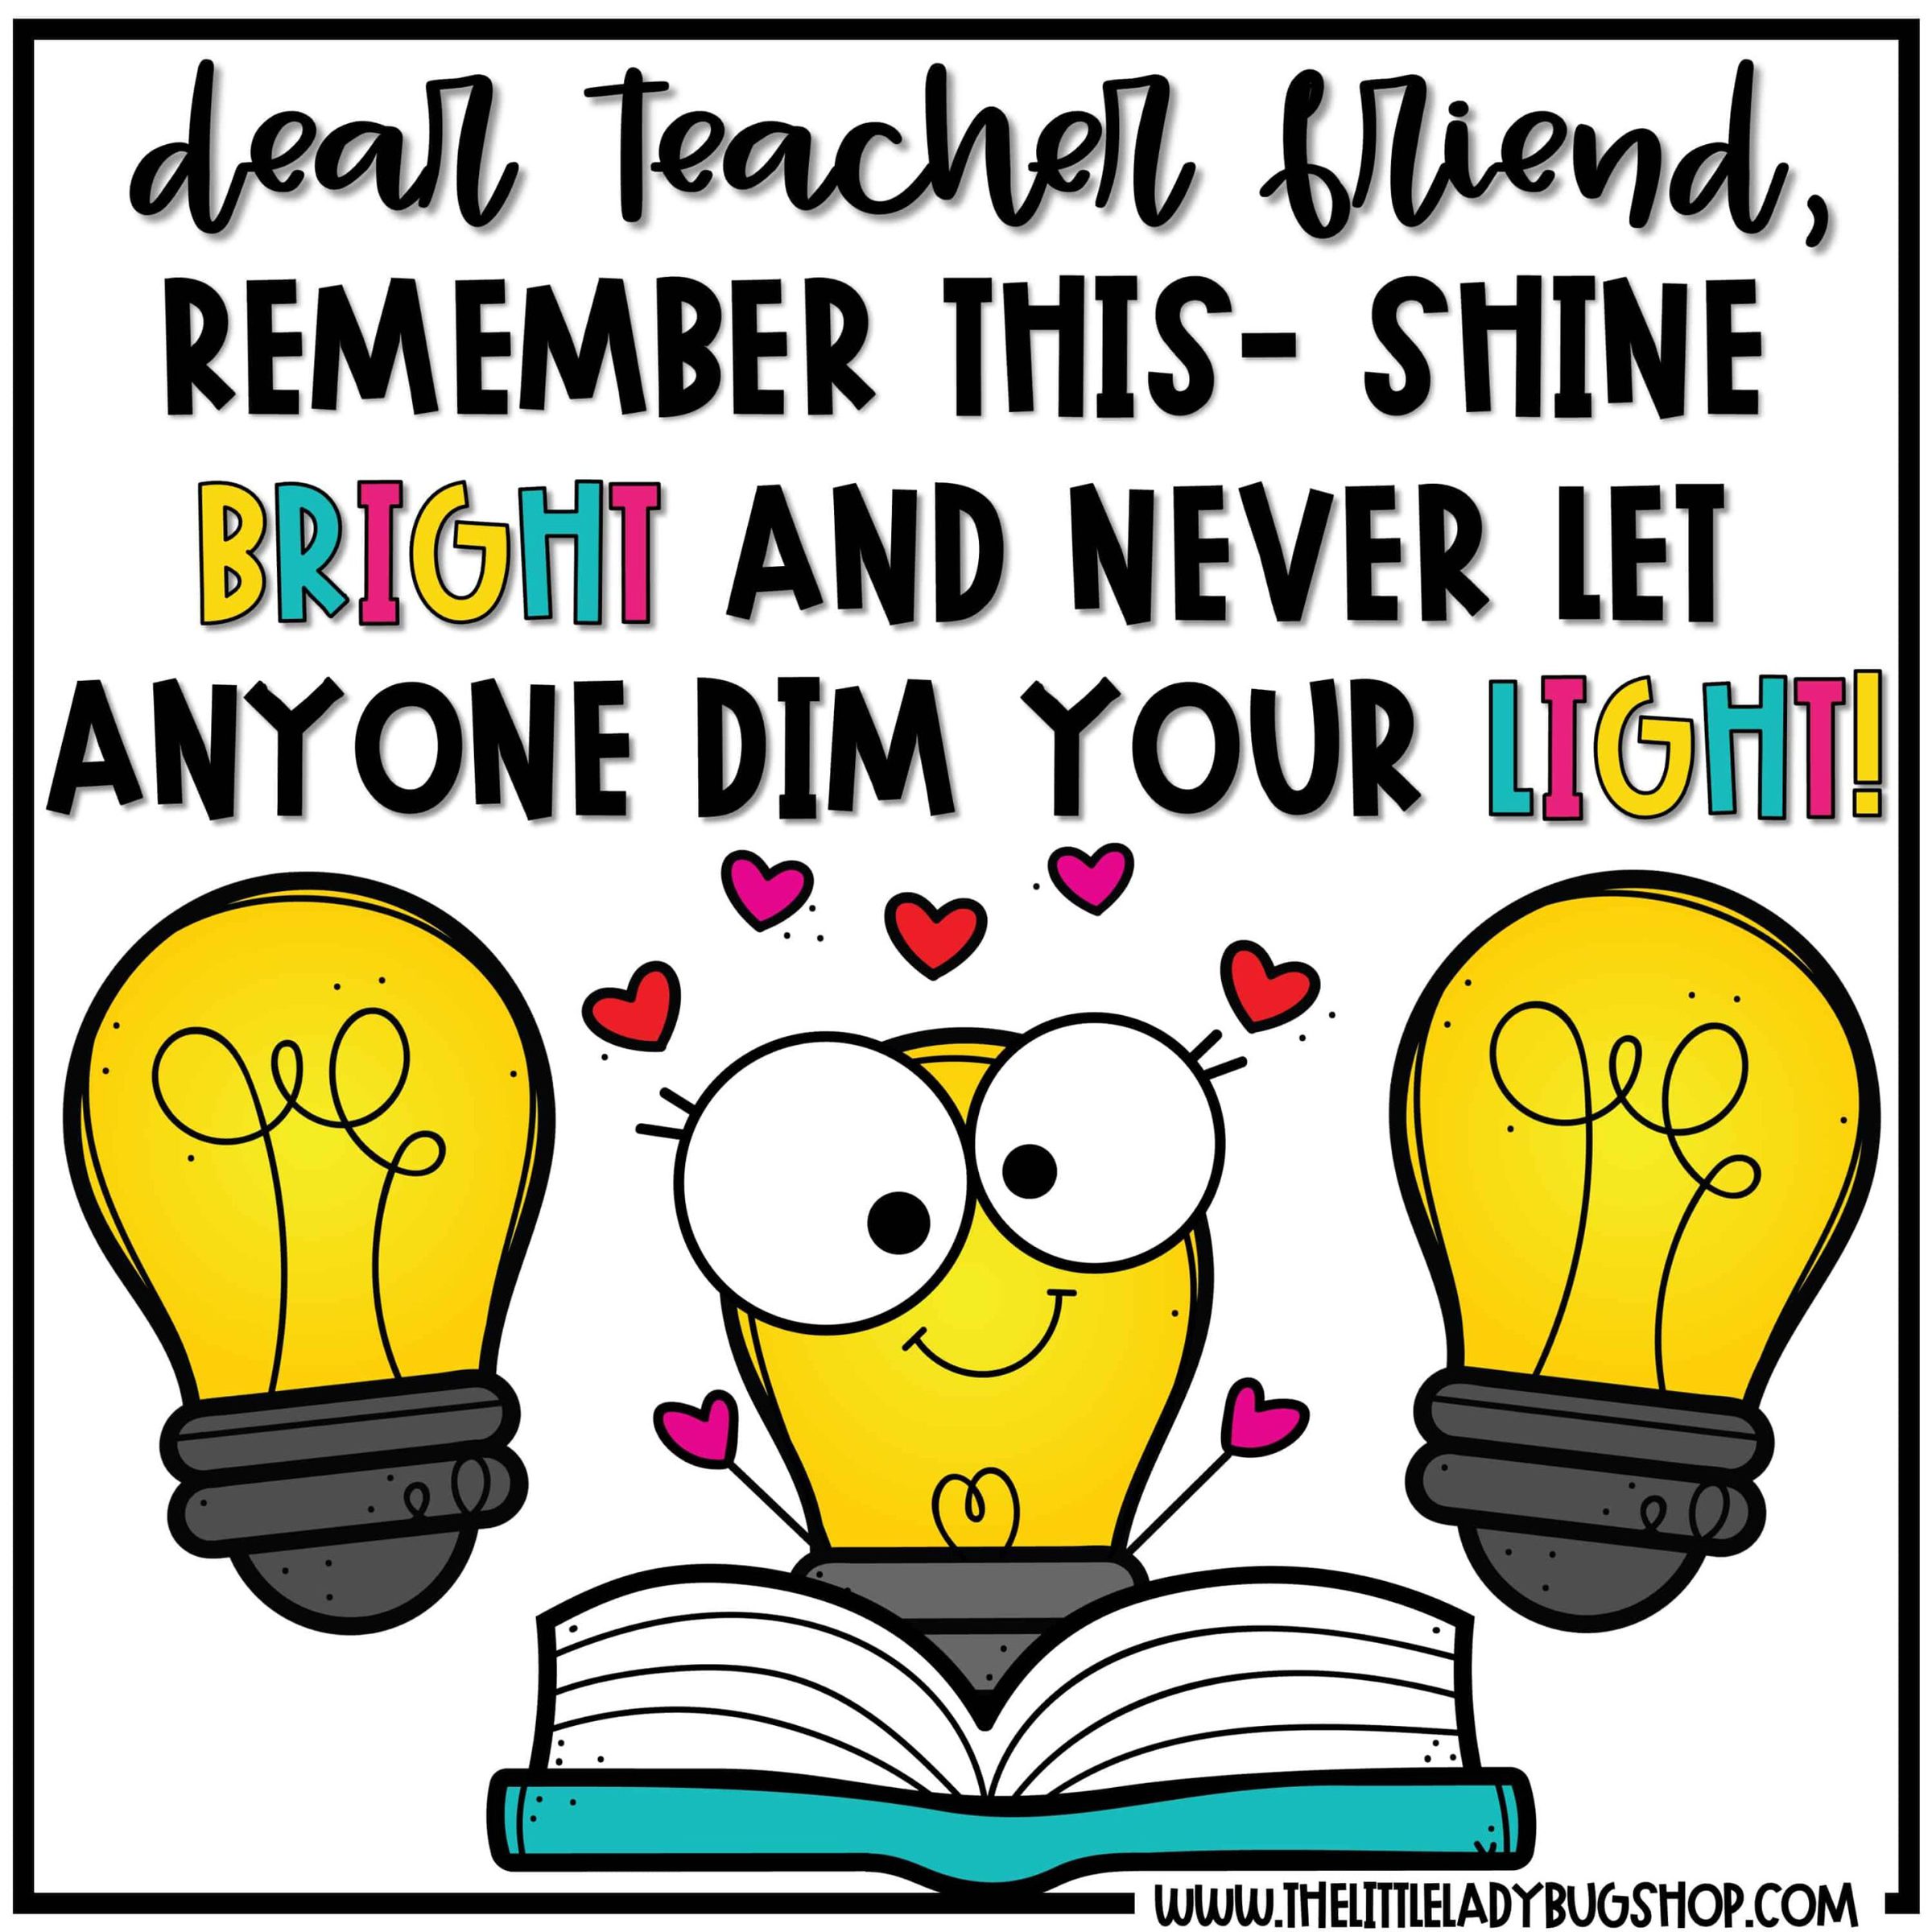 Dear Teacher Friend, You are an amazing teacher